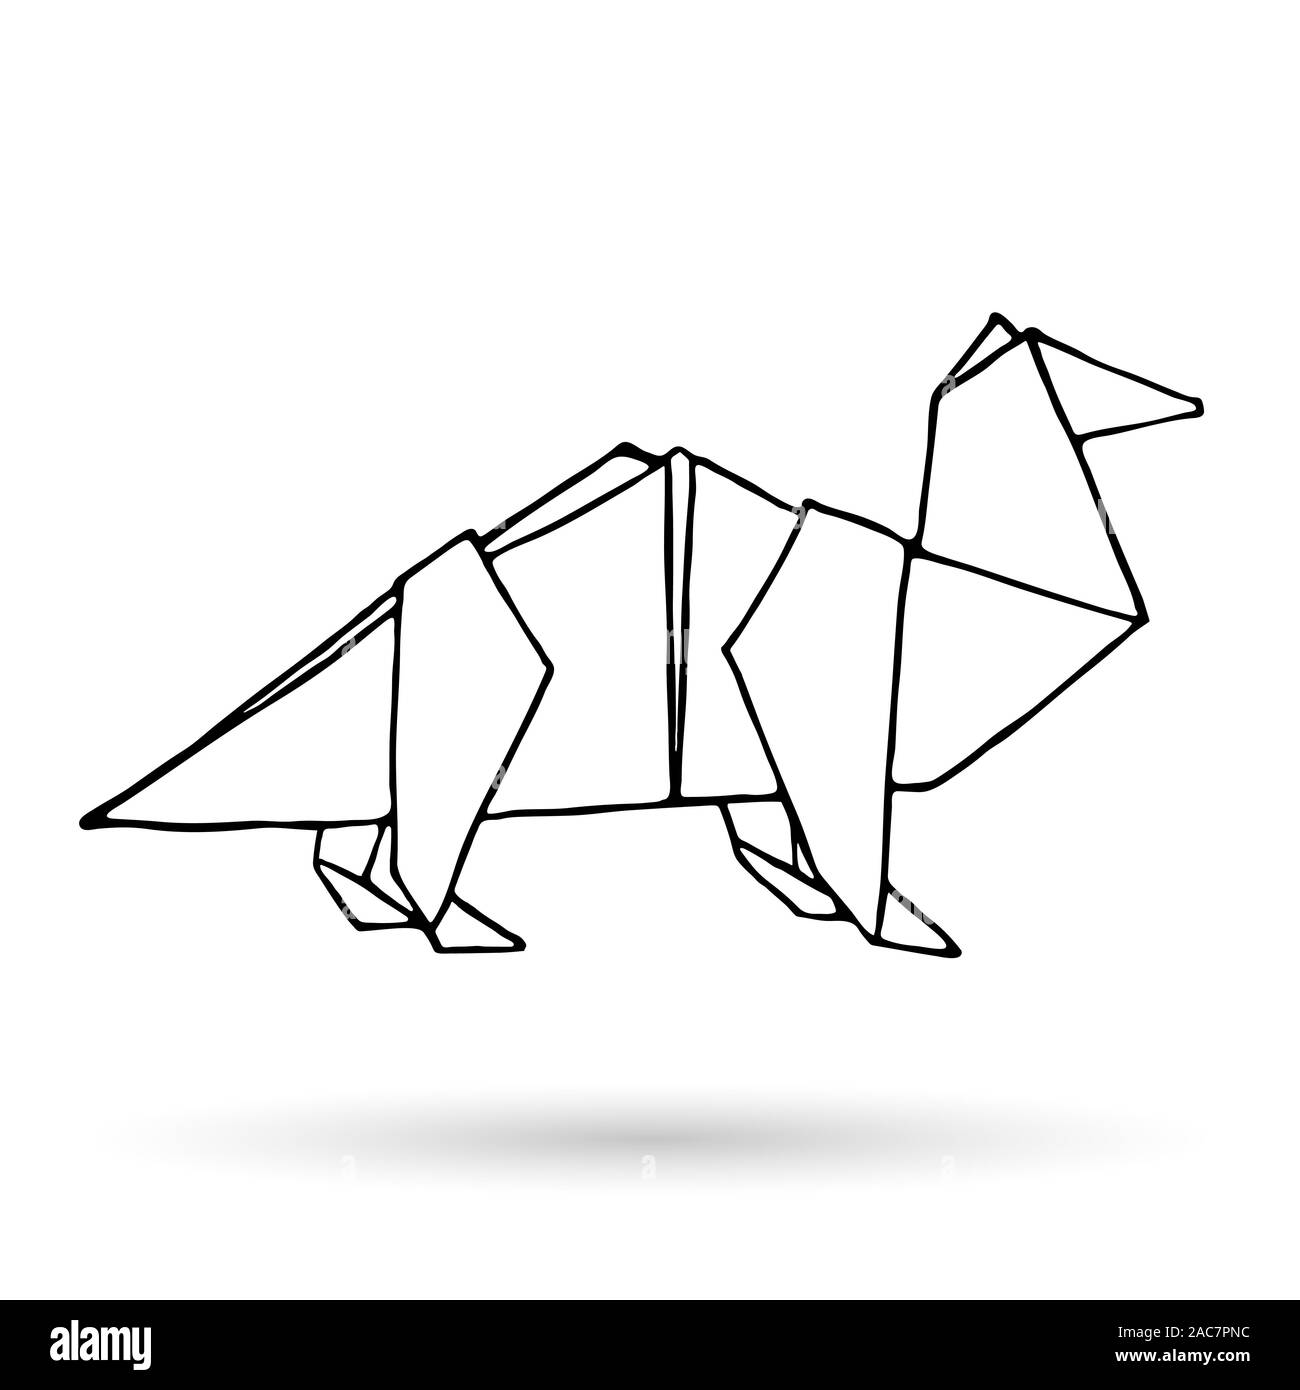 Origami doodle simple icon. Hand drawn origami animal. Geometric logo or icon. Minimalistic Vector illustration Stock Vector